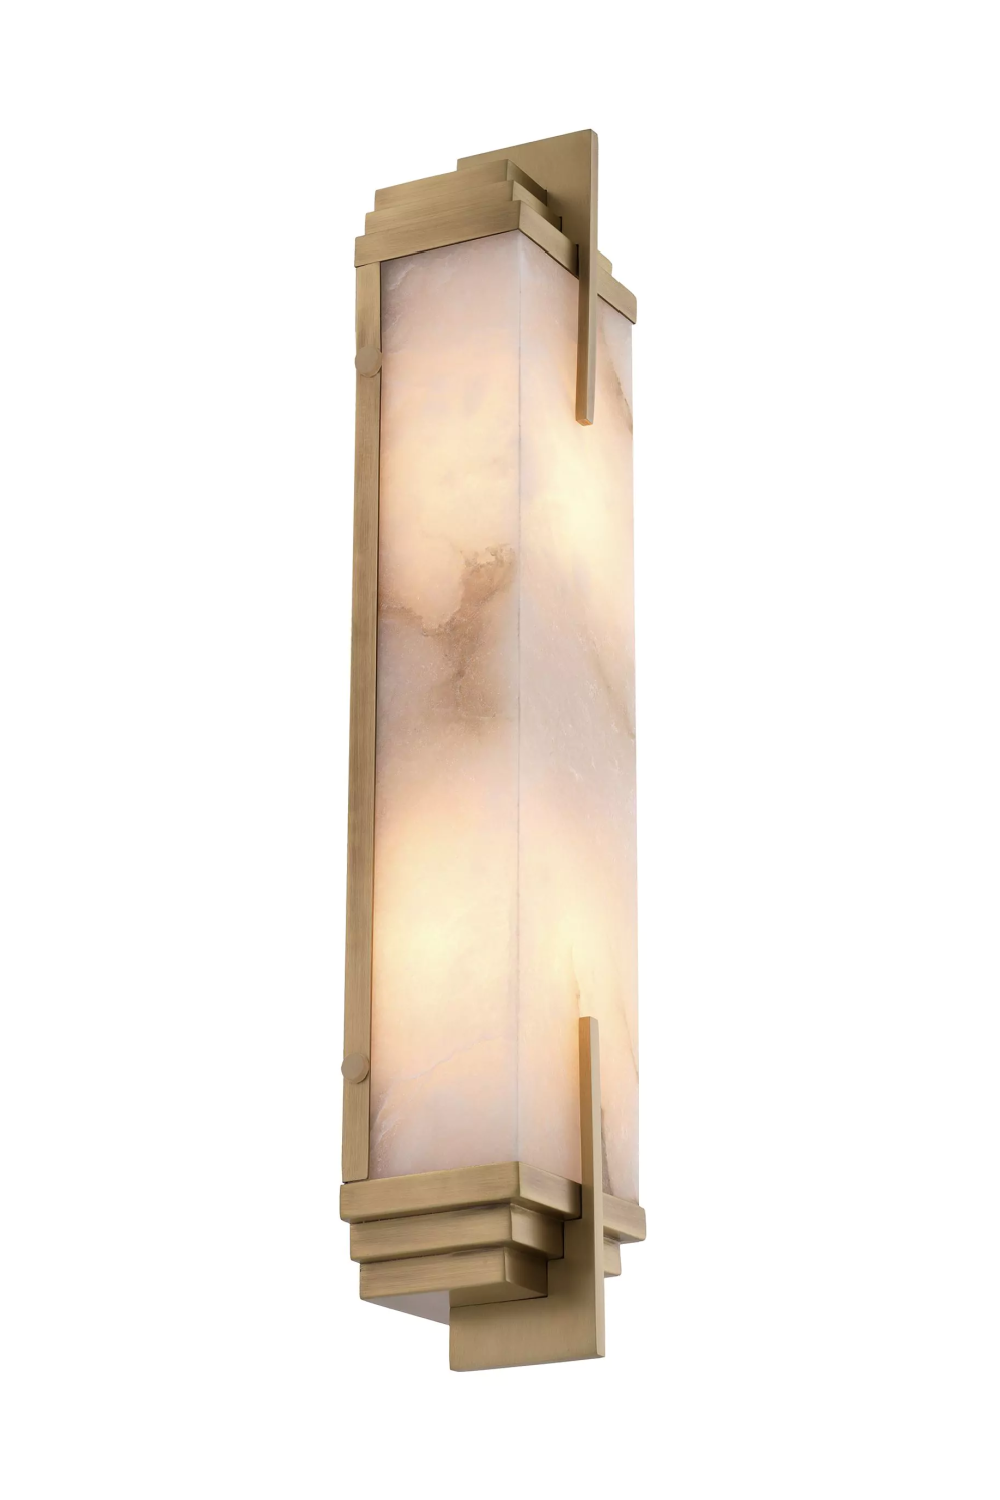 Eichholtz Claridges Double Wall Light Antique Brass Finish Glass Shade